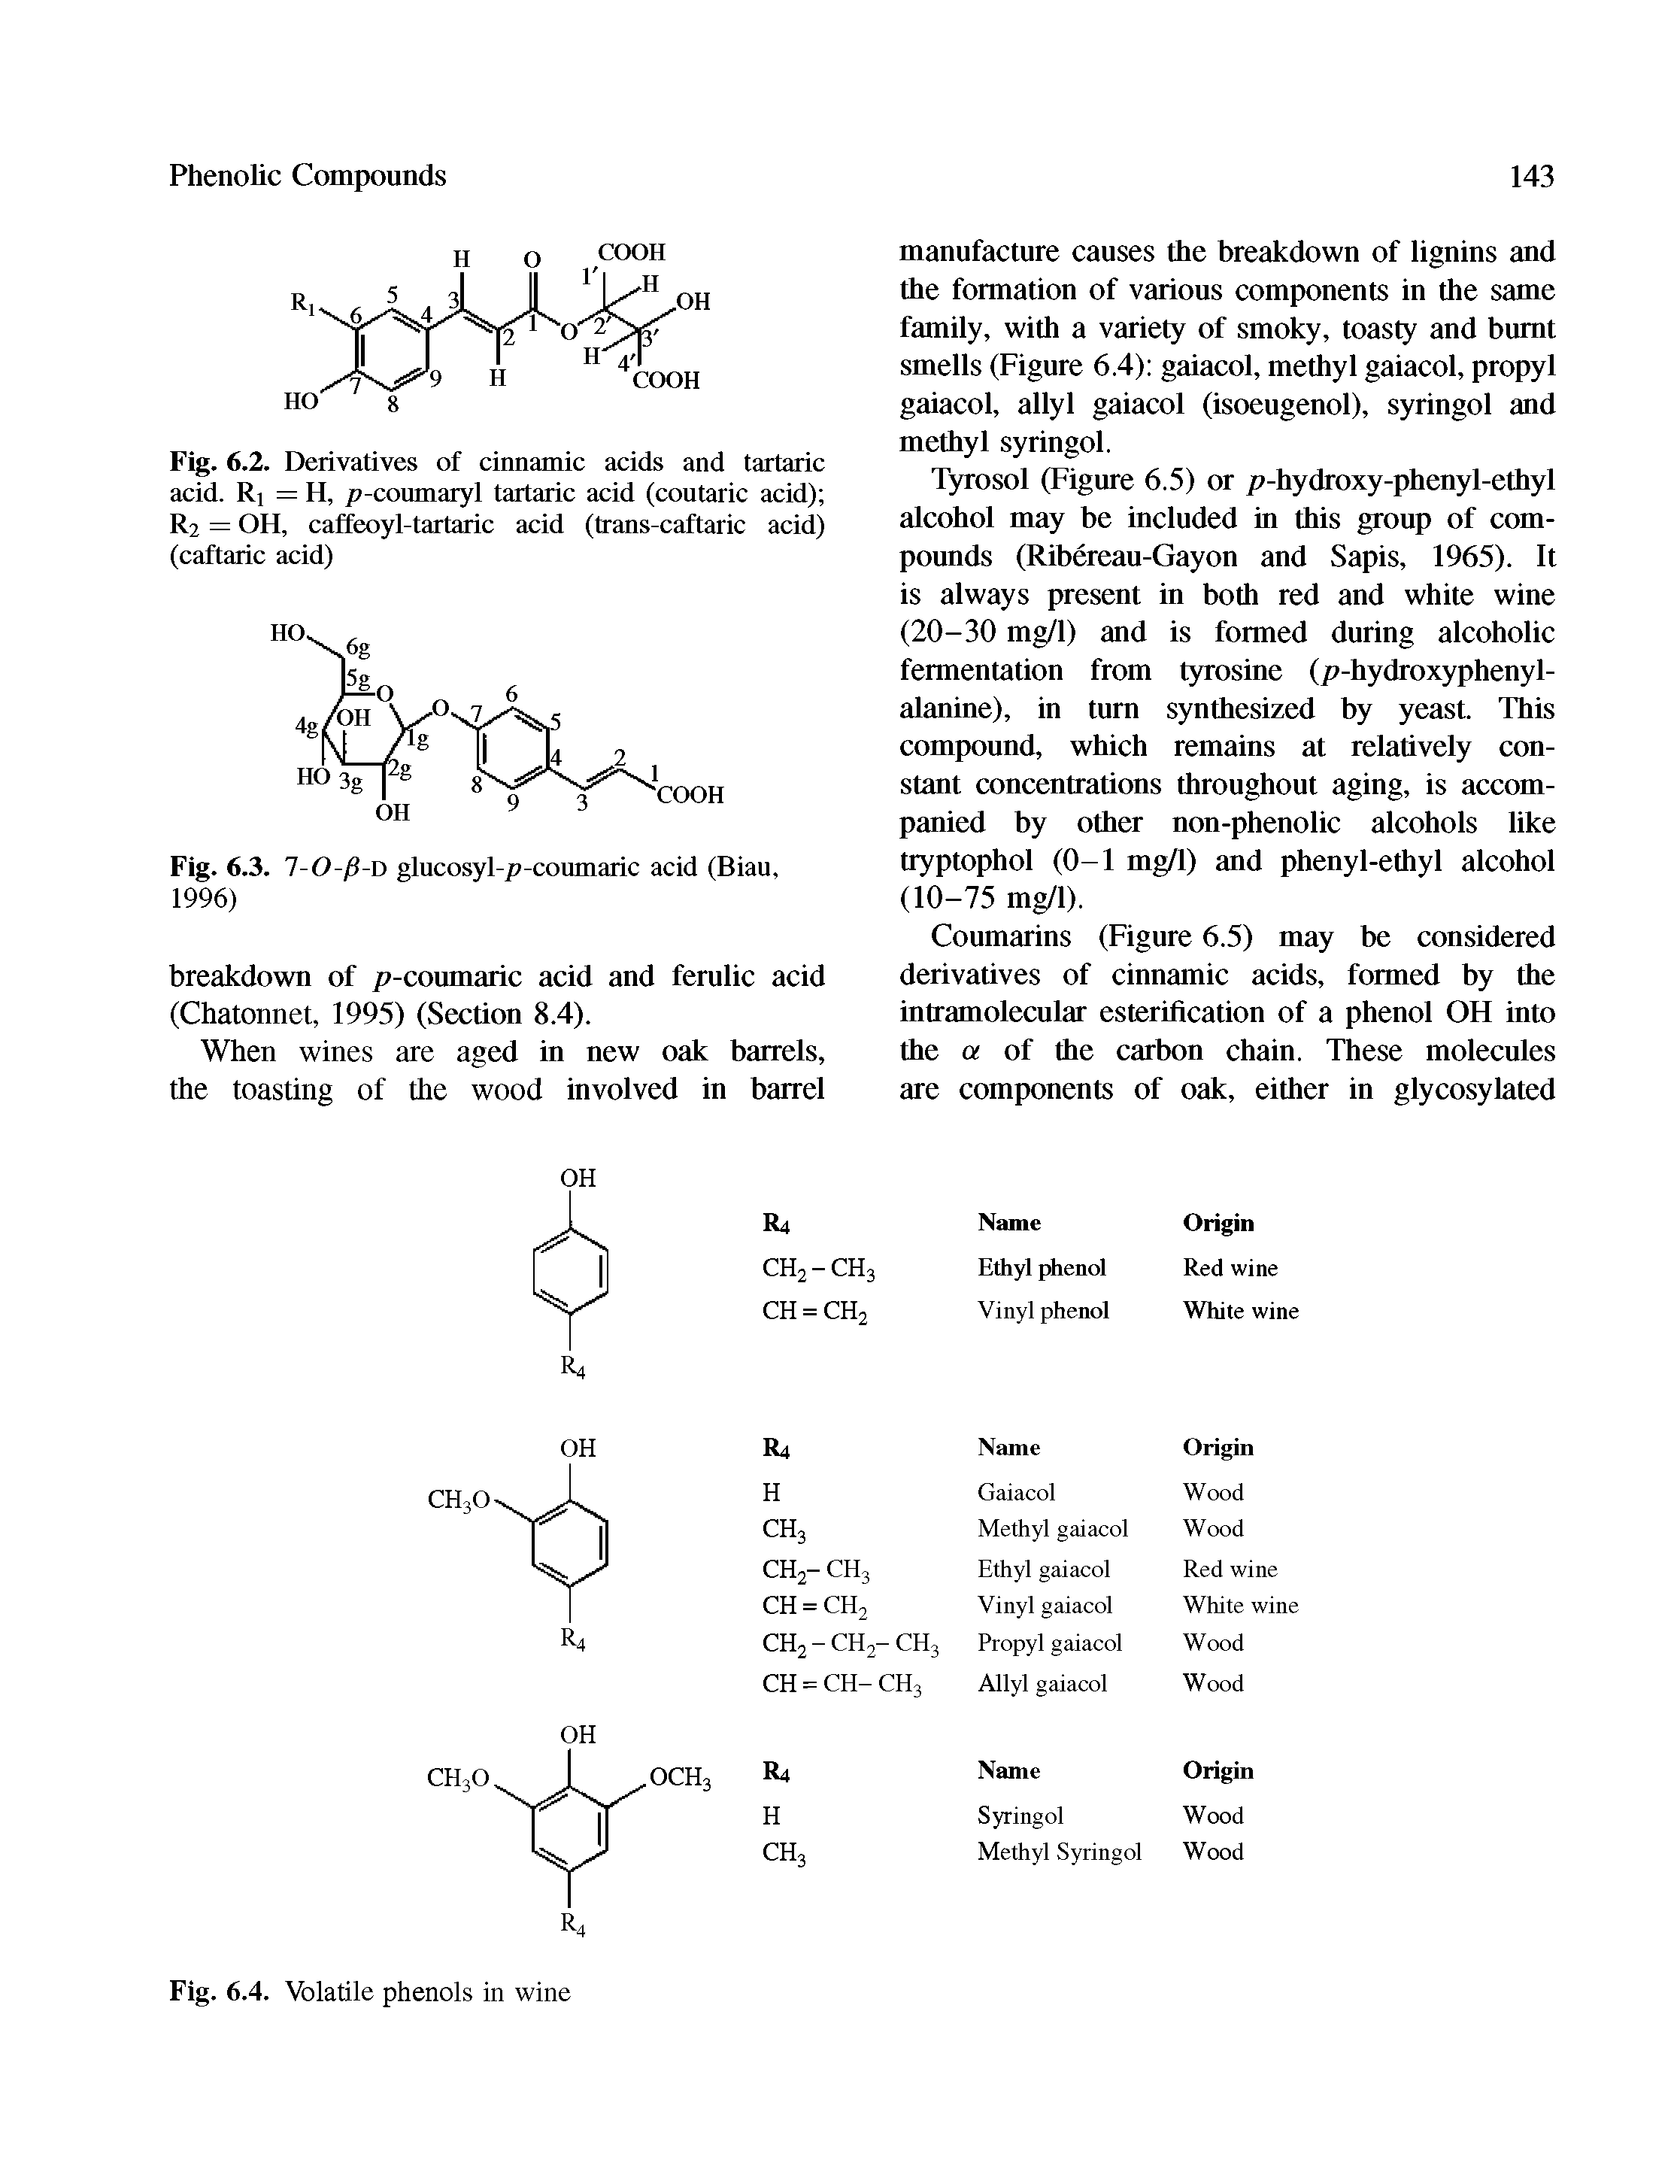 Fig. 6.2. Derivatives of cinnamic acids and tartaric acid. Ri = H, p-conmaryl tartaric acid (contaric acid) R2 = OH, caffeoyl-tartaric acid (trans-caftaric acid) (caftaric acid)...